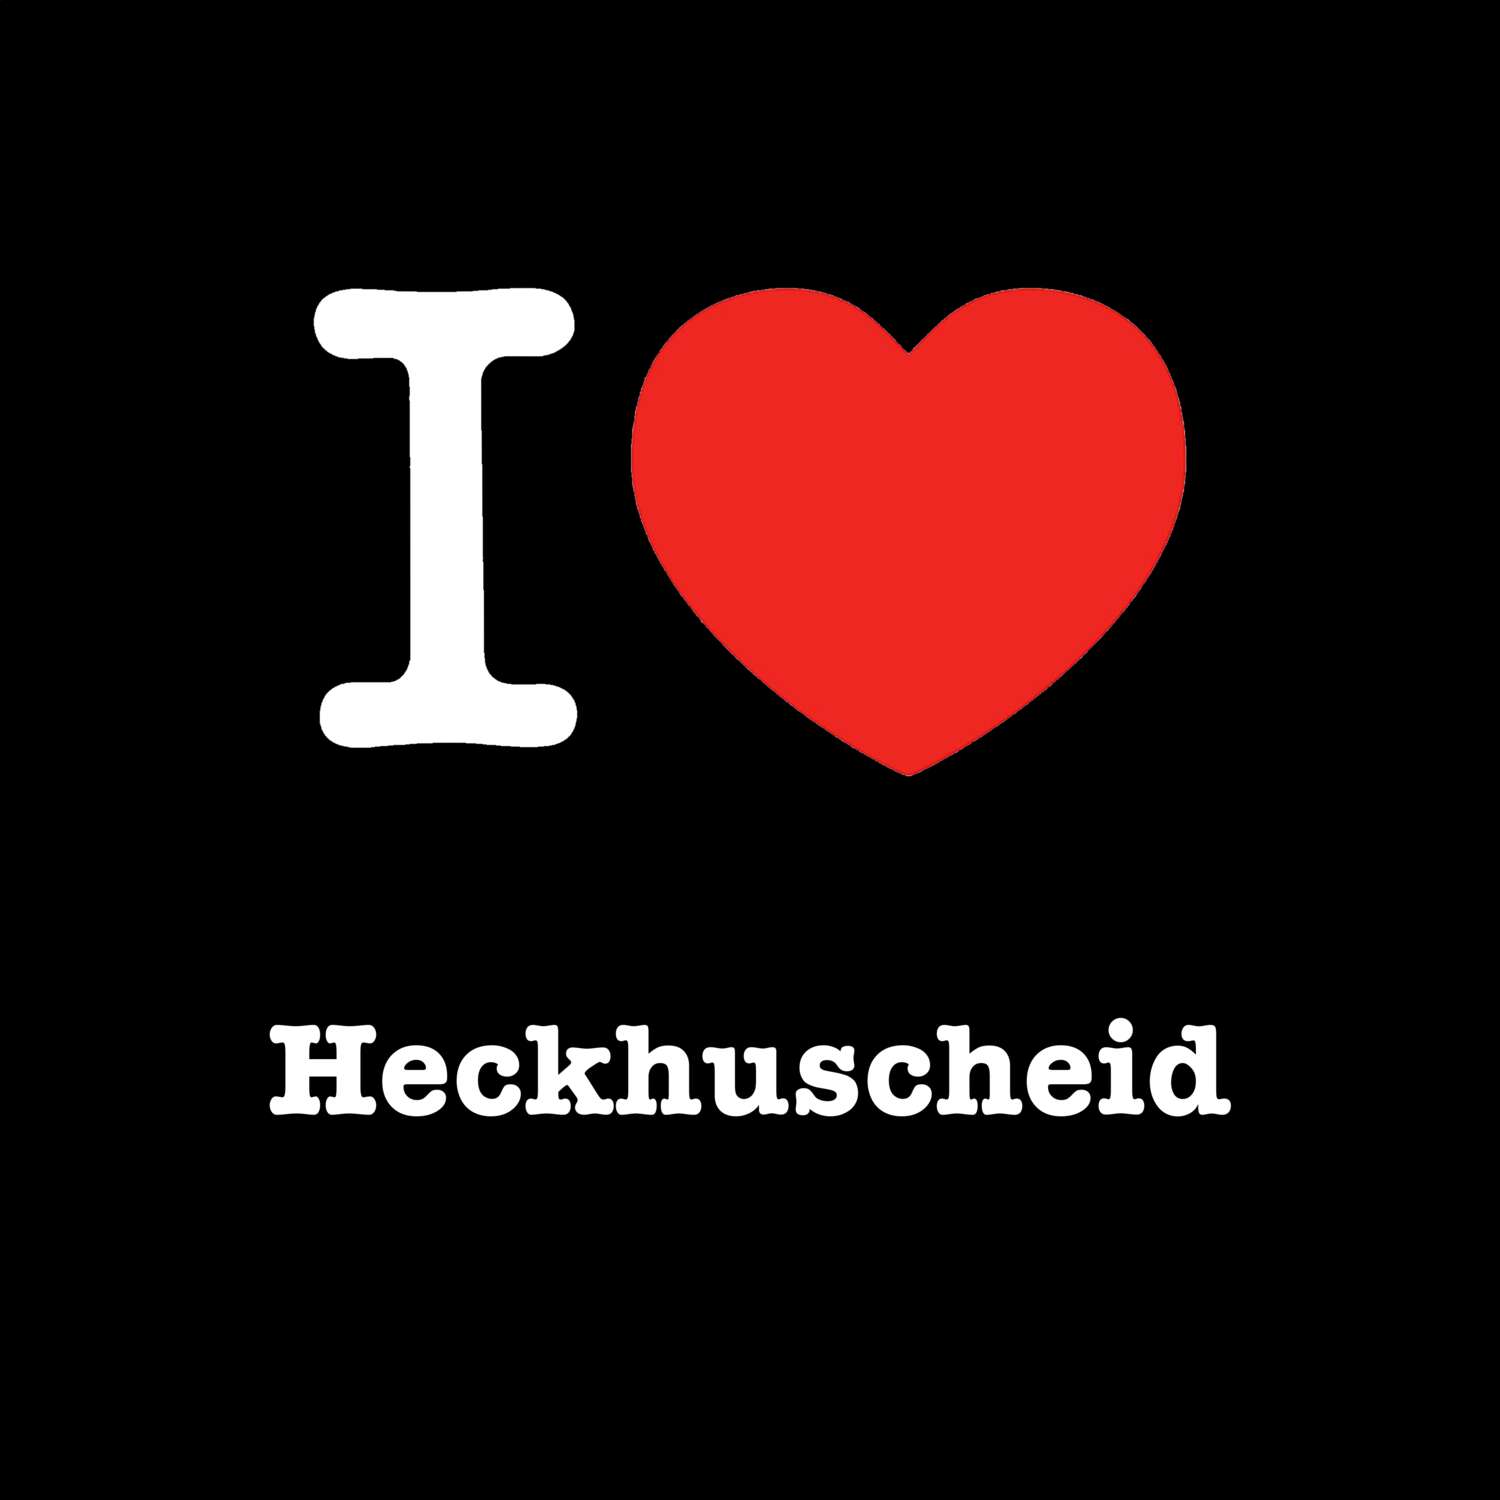 Heckhuscheid T-Shirt »I love«